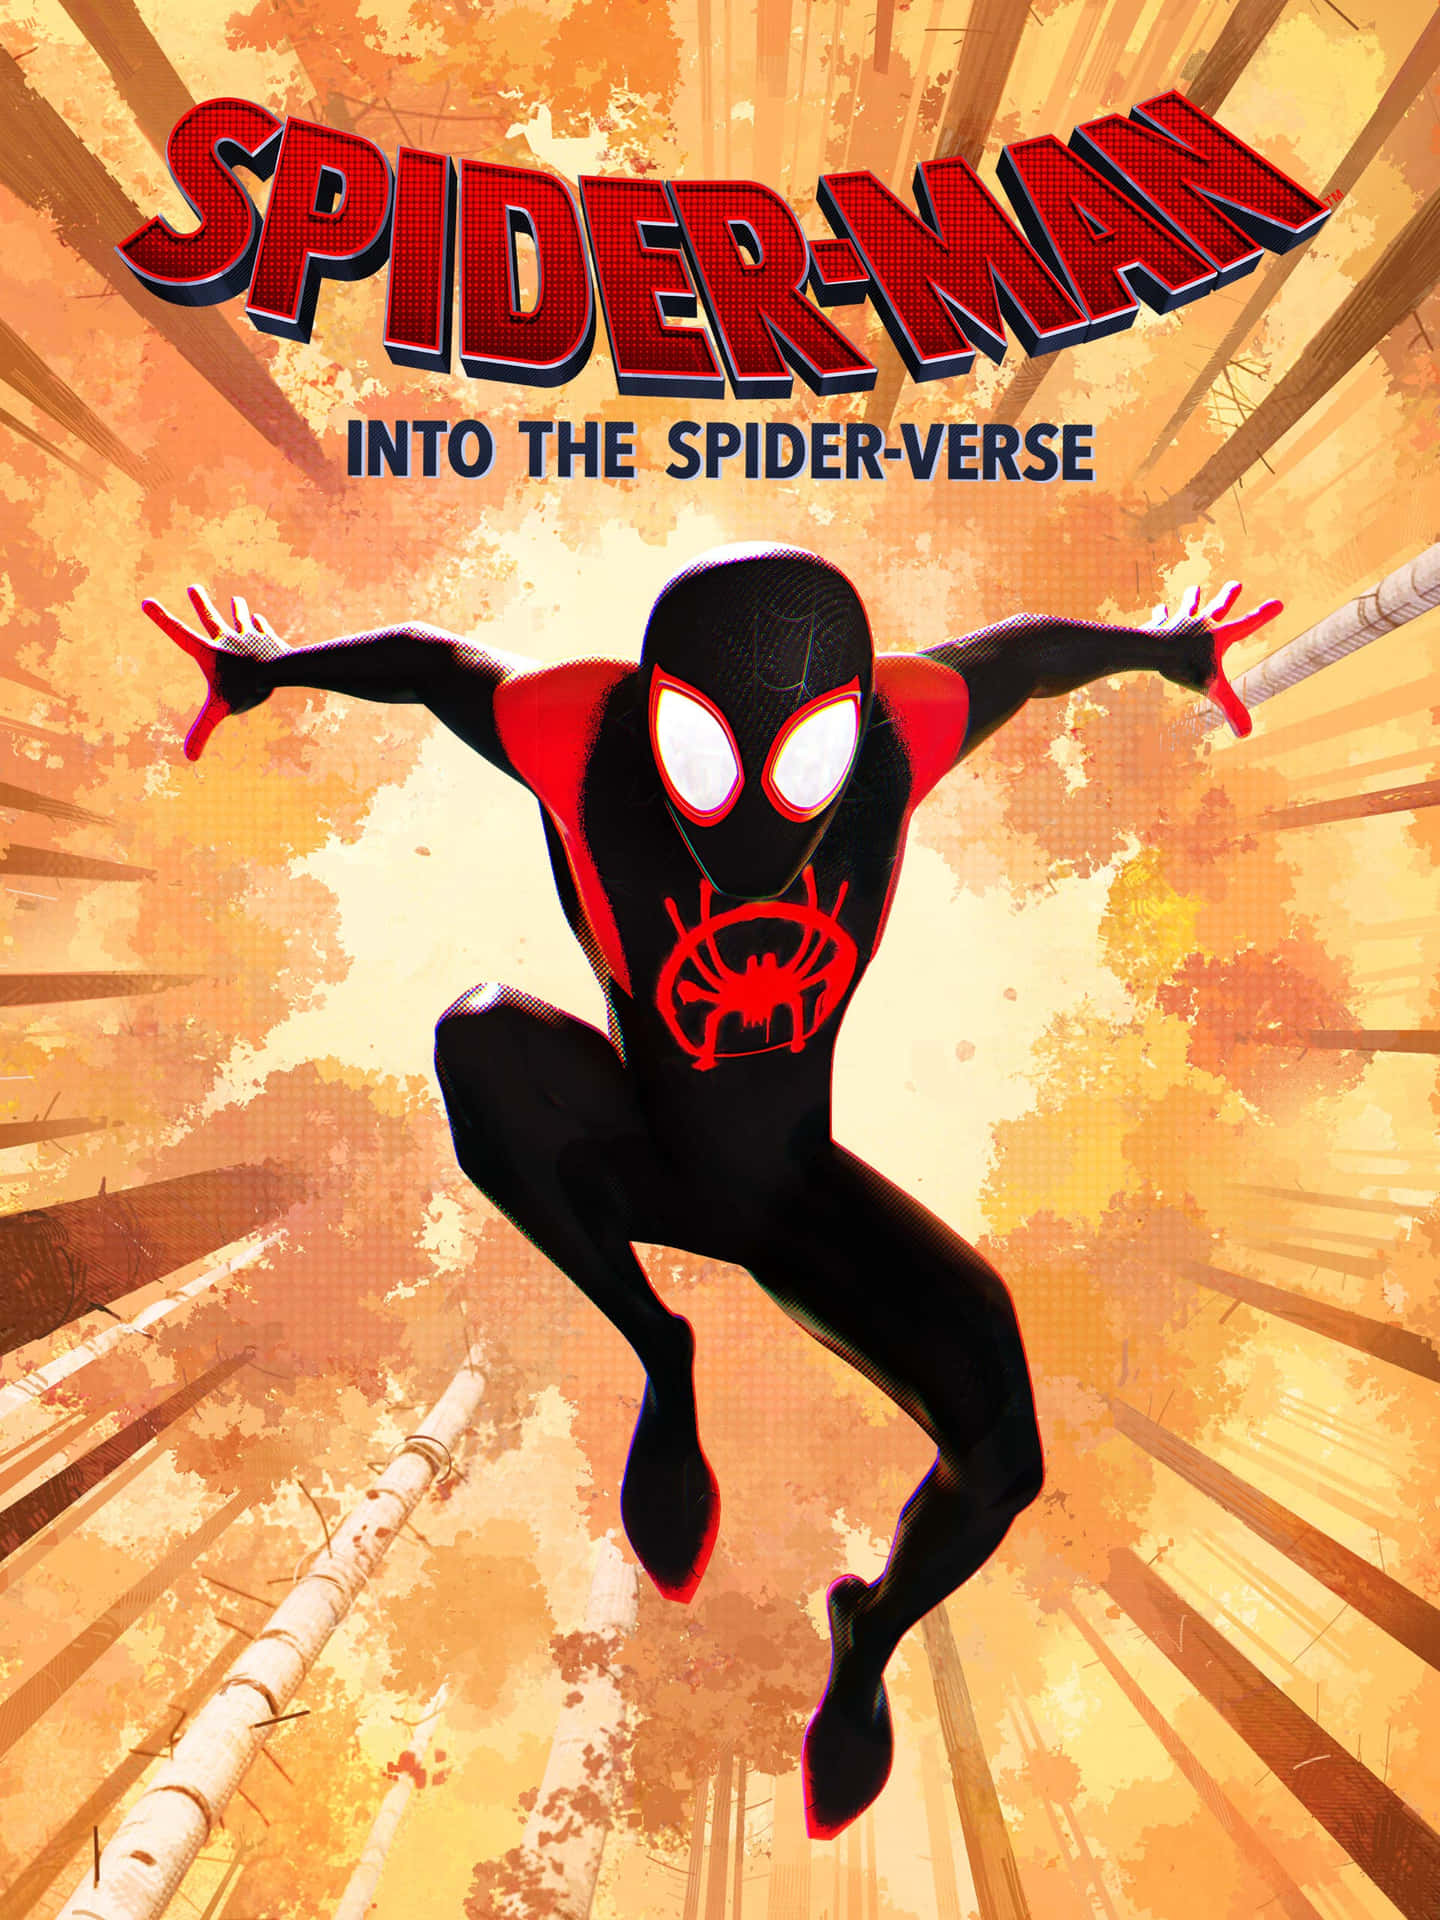 "The greatest superhero of them all - Spiderman!" Wallpaper